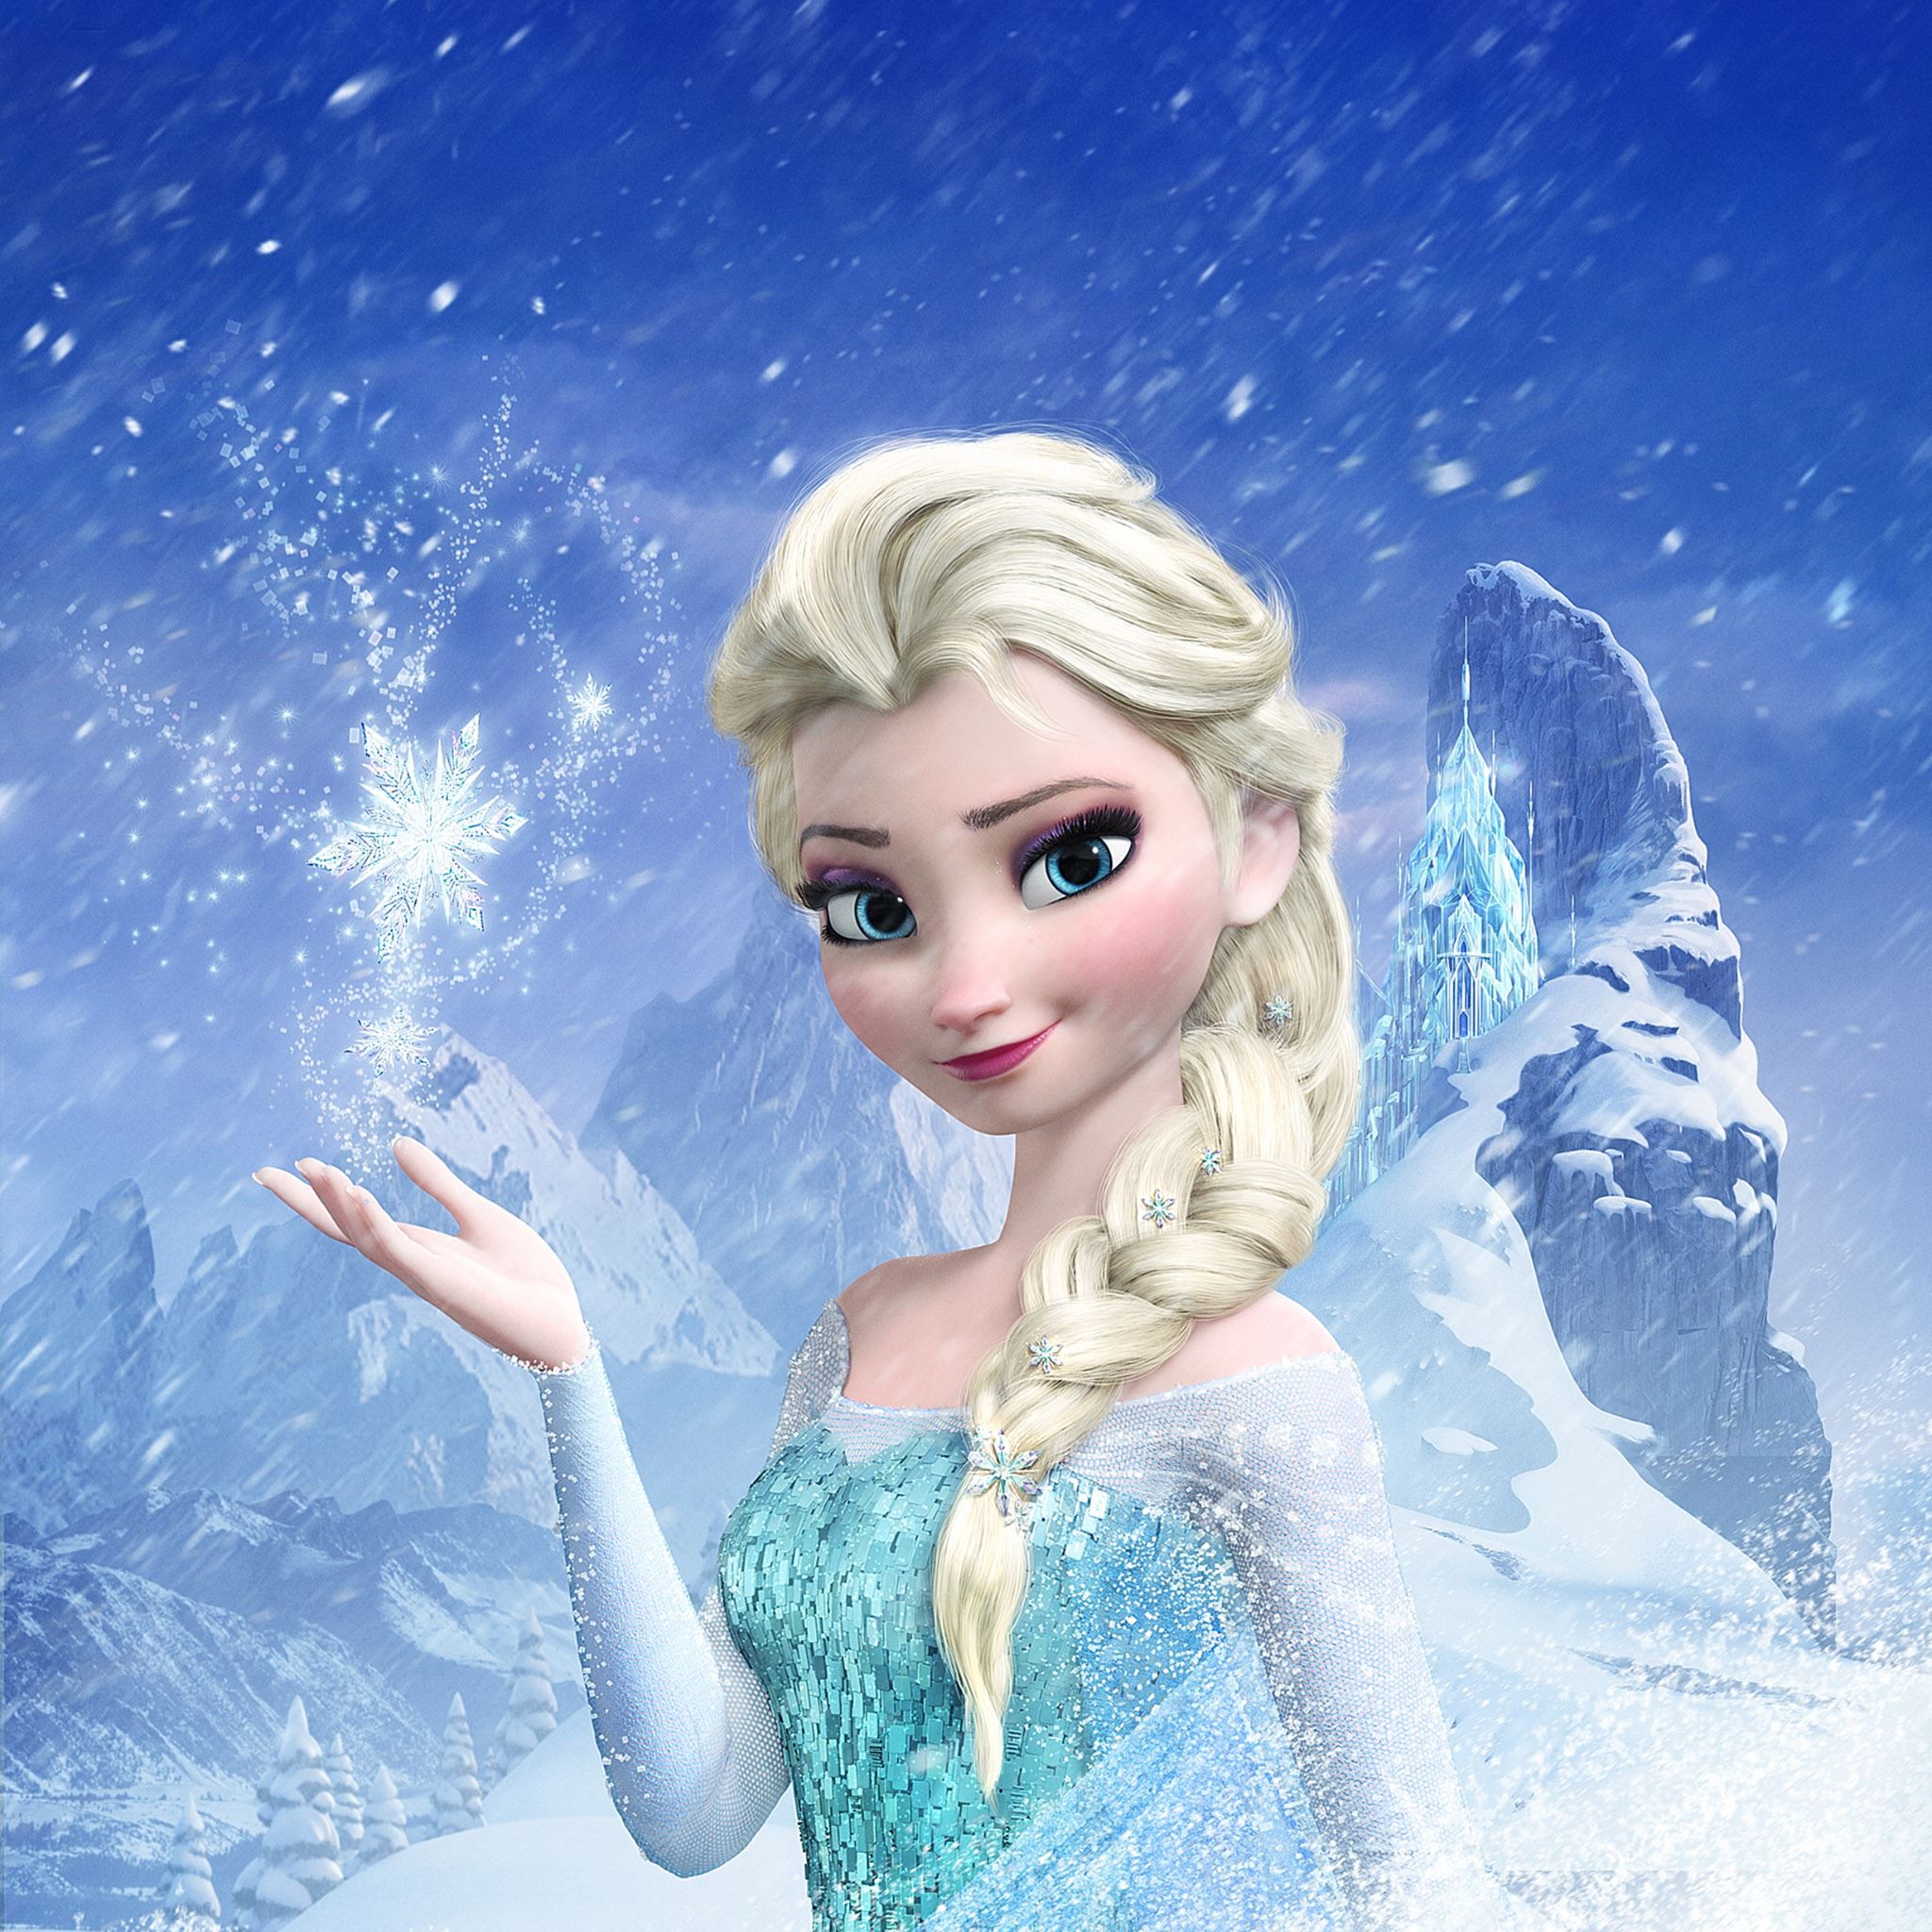 Elsa Frozen Queen iPad Air wallpaper 